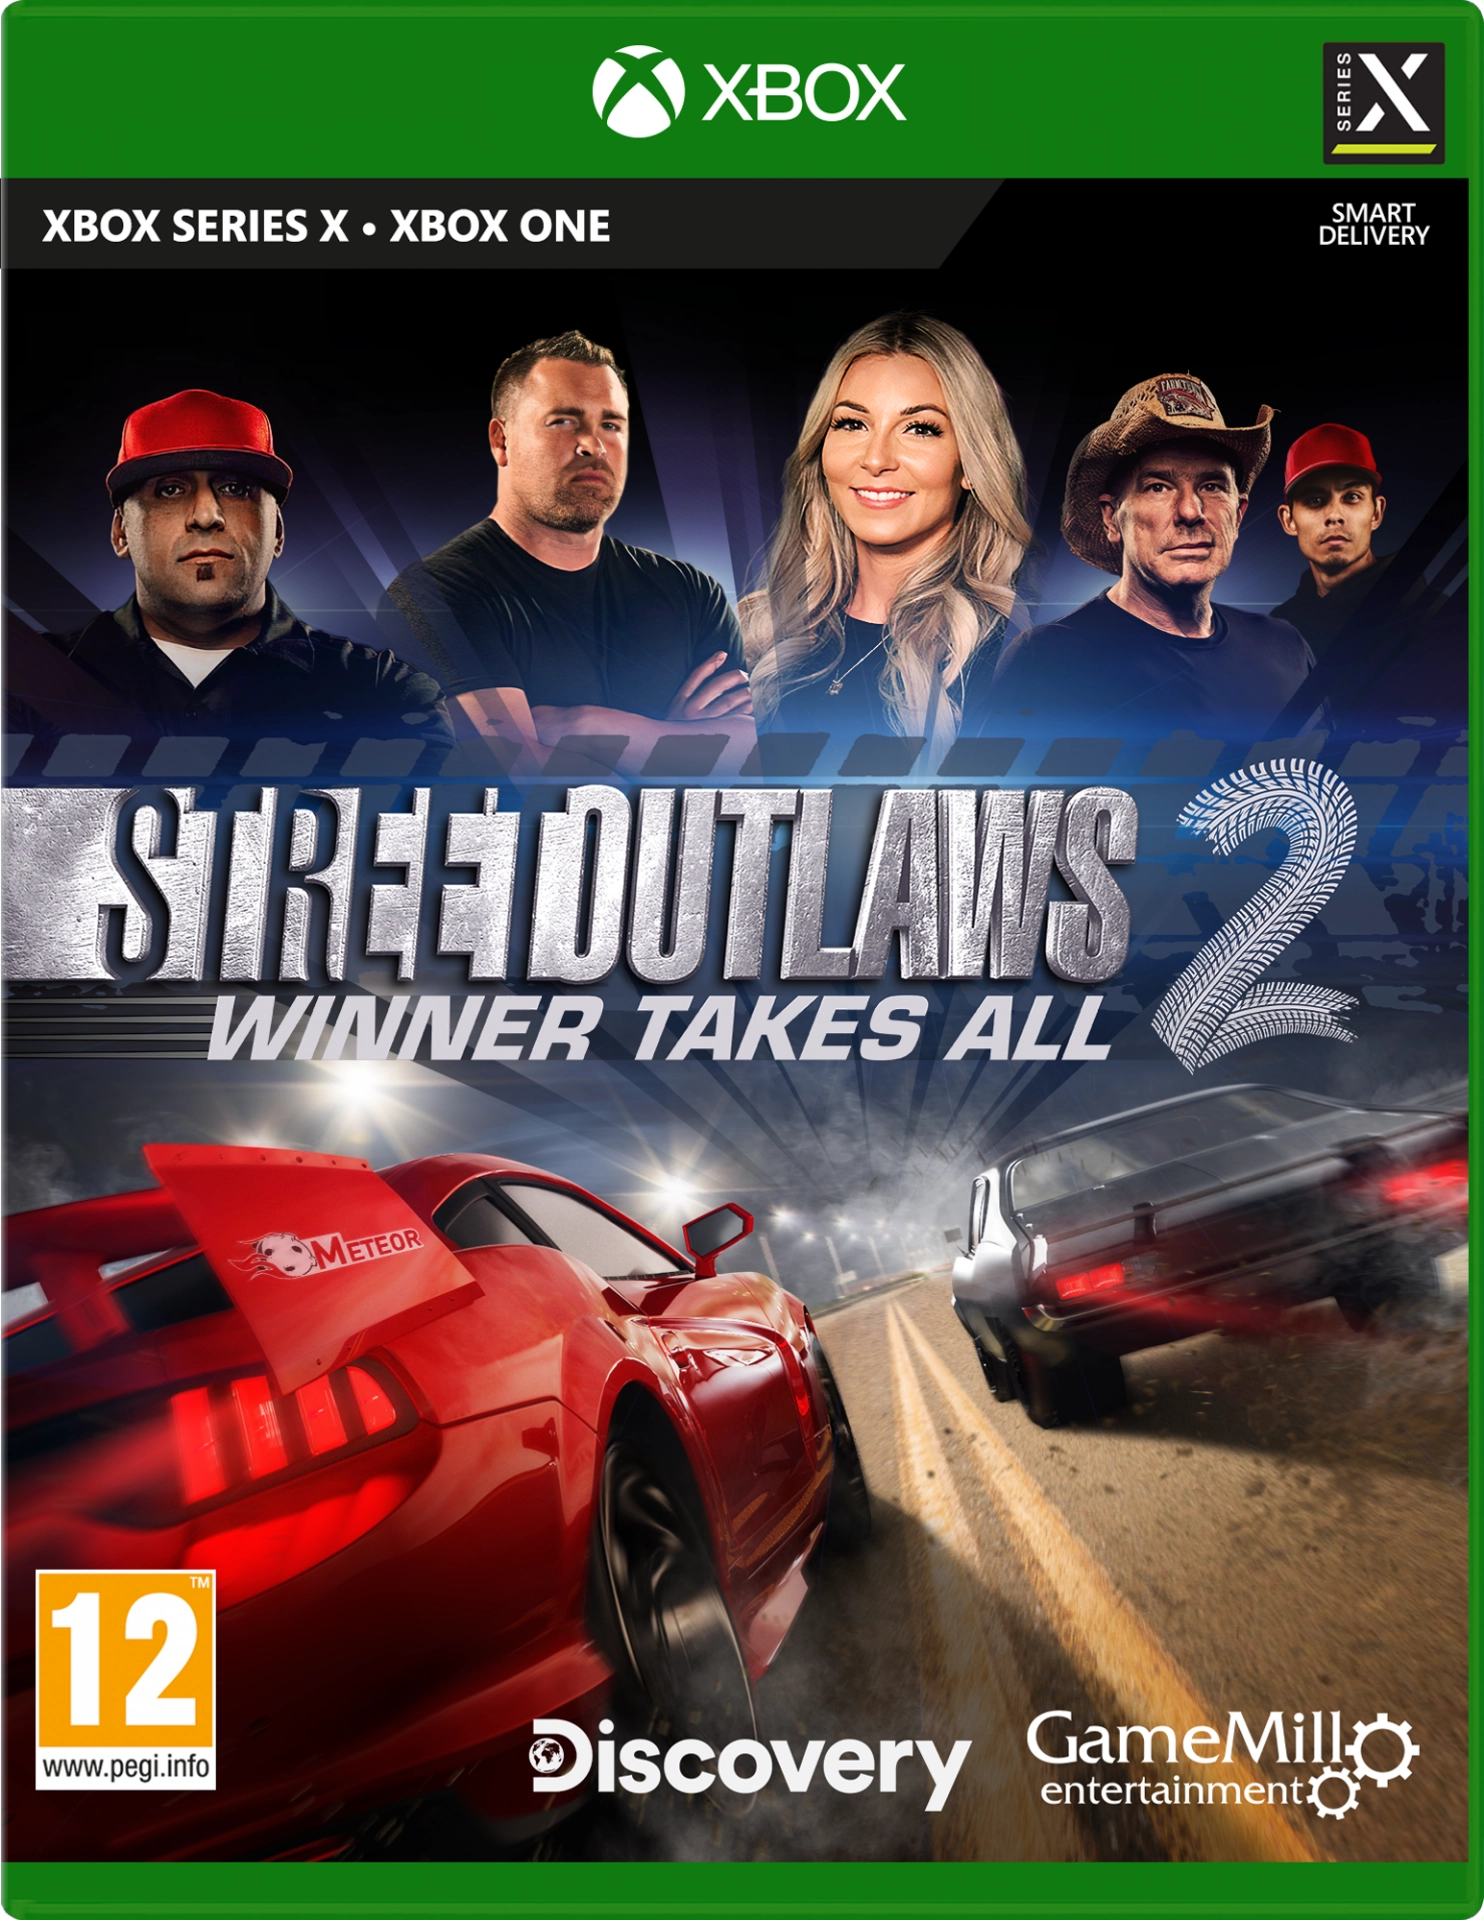 Street Outlaws 2: Winner Takes All (Xbox Series X), GameMill Entertainment